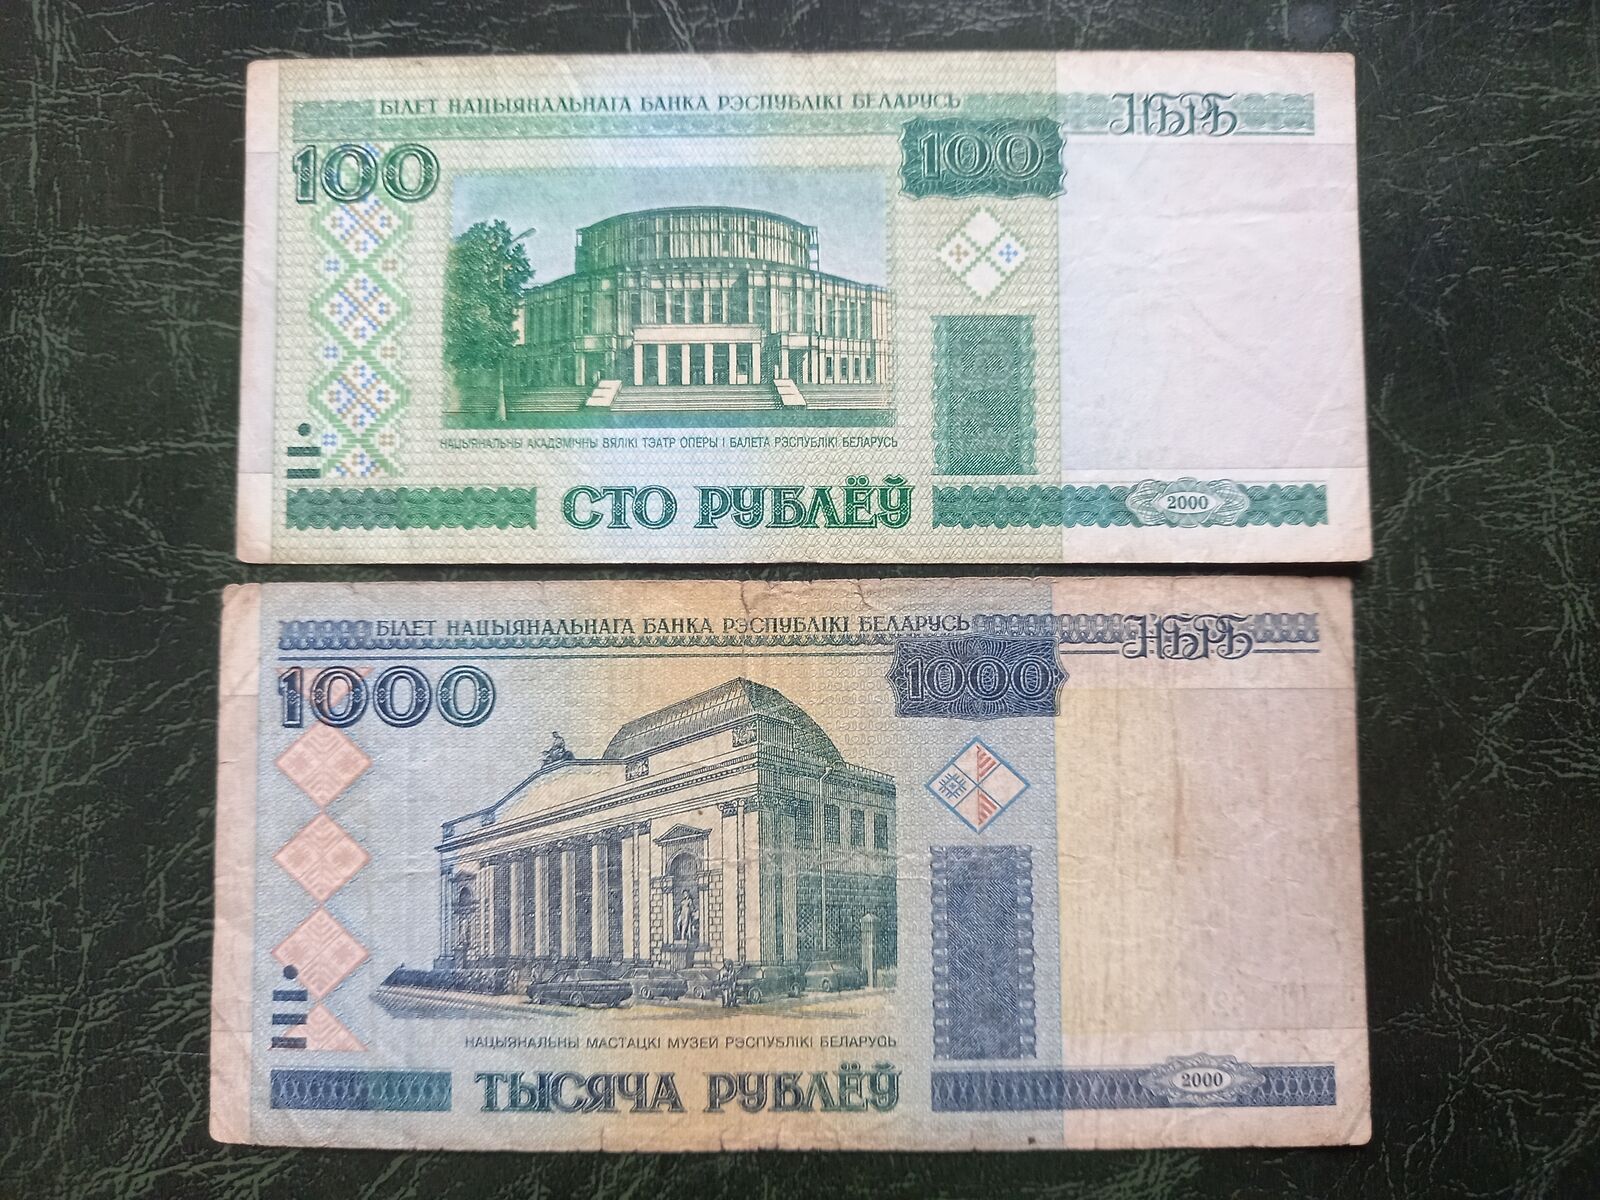 BELARUS 100 & 1000 Ruble Banknote 2000